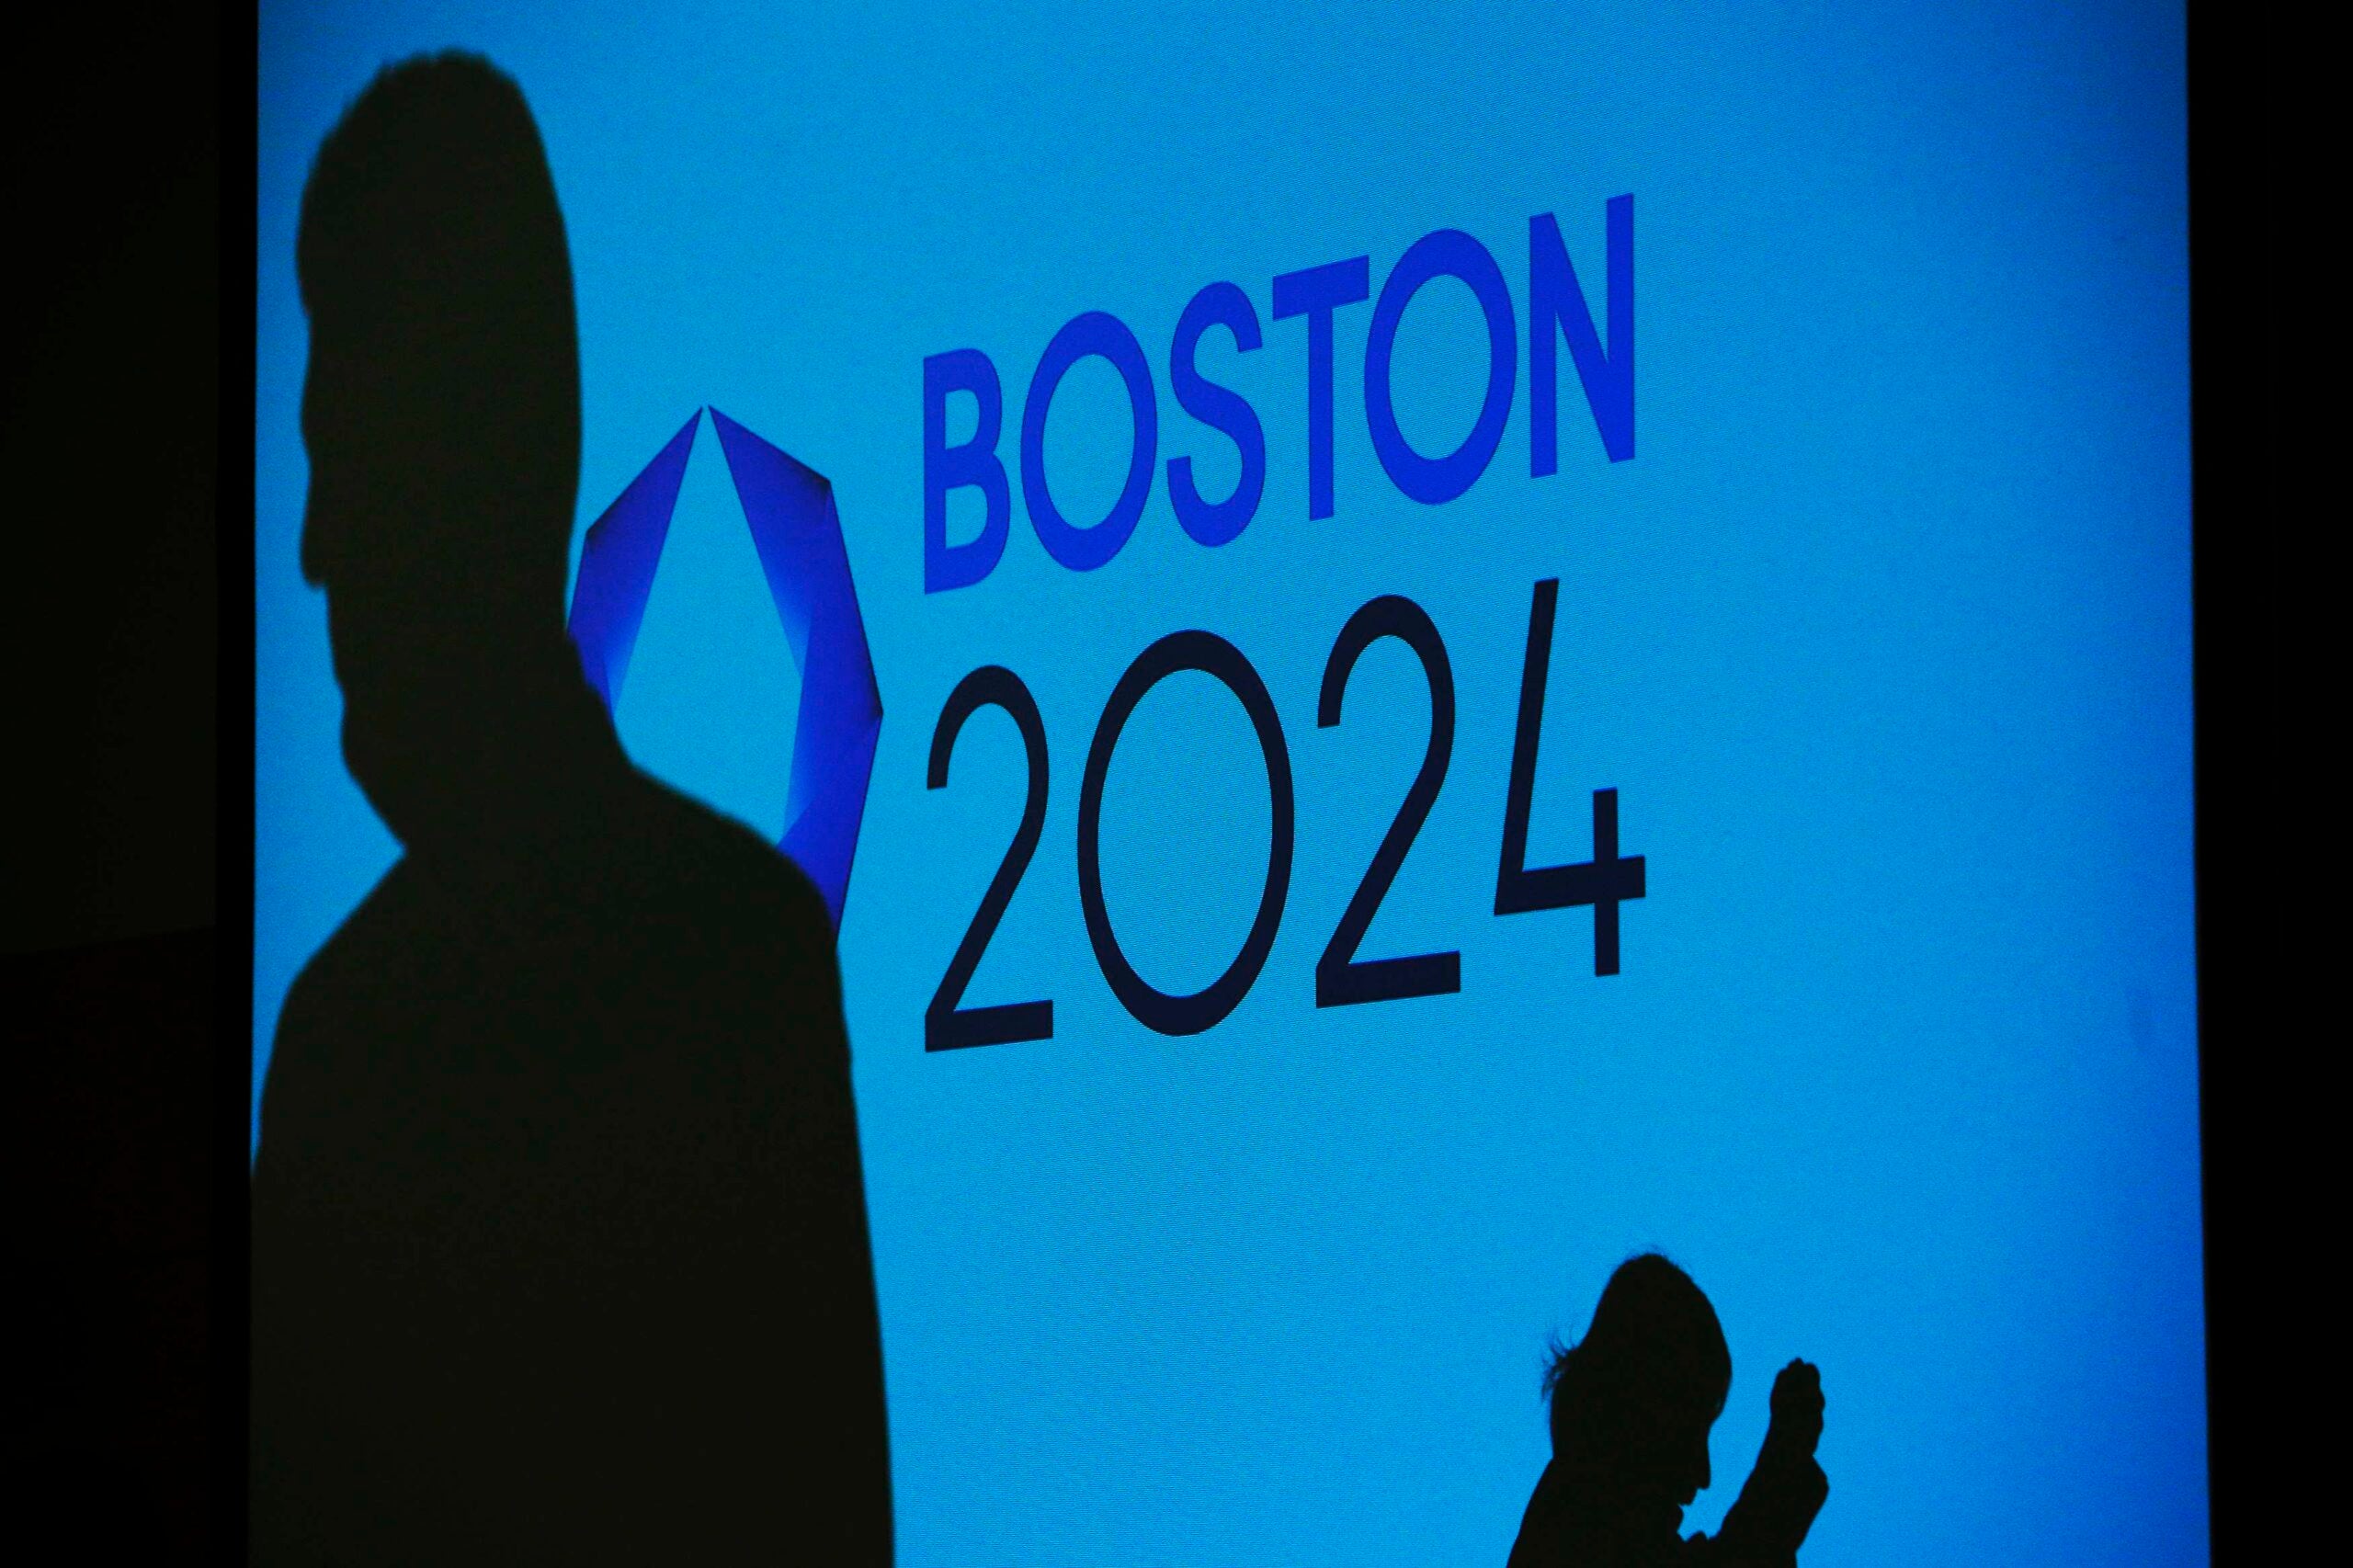 Boston 2024 ended its Olympic bid deep in debt